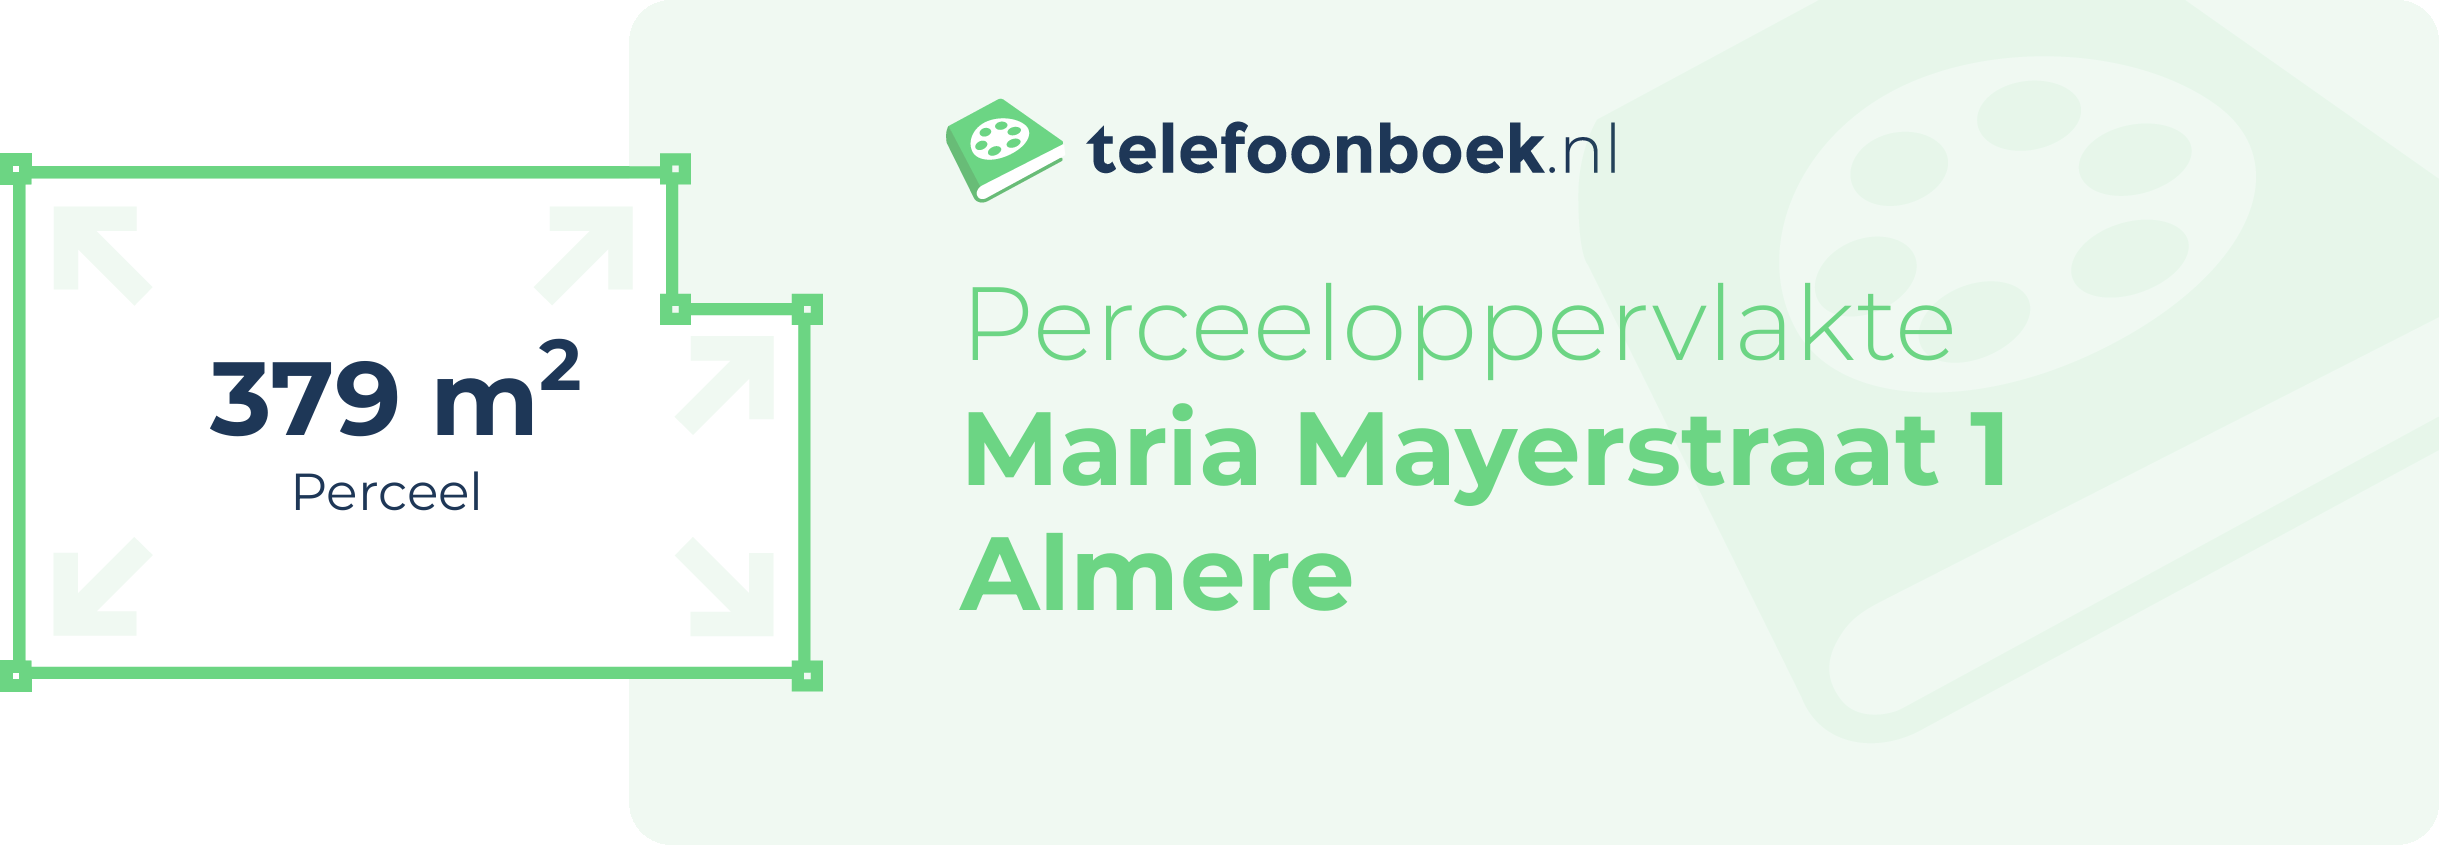 Perceeloppervlakte Maria Mayerstraat 1 Almere